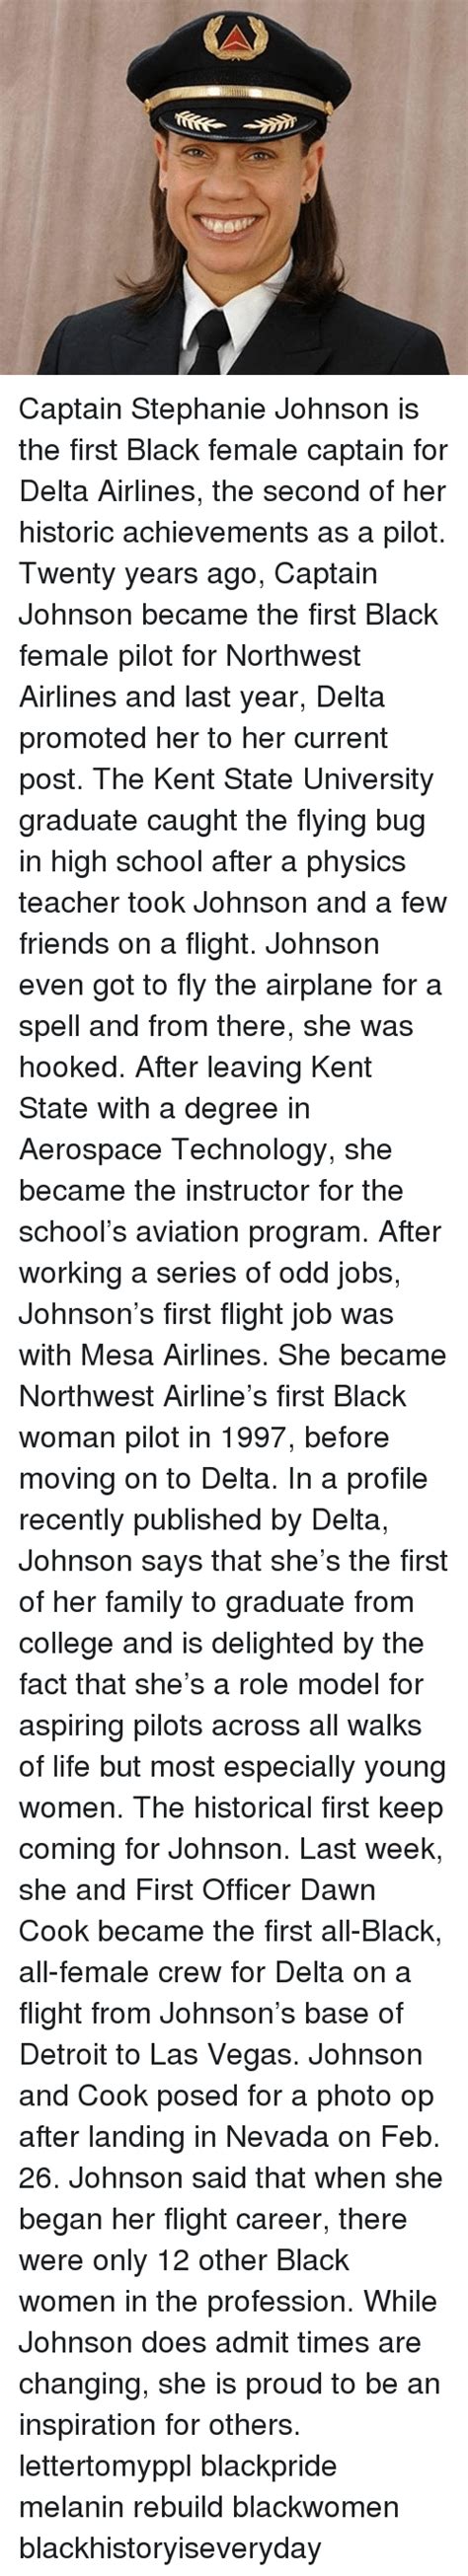 Captain Stephanie Johnson Is The First Black Female Captain For Delta